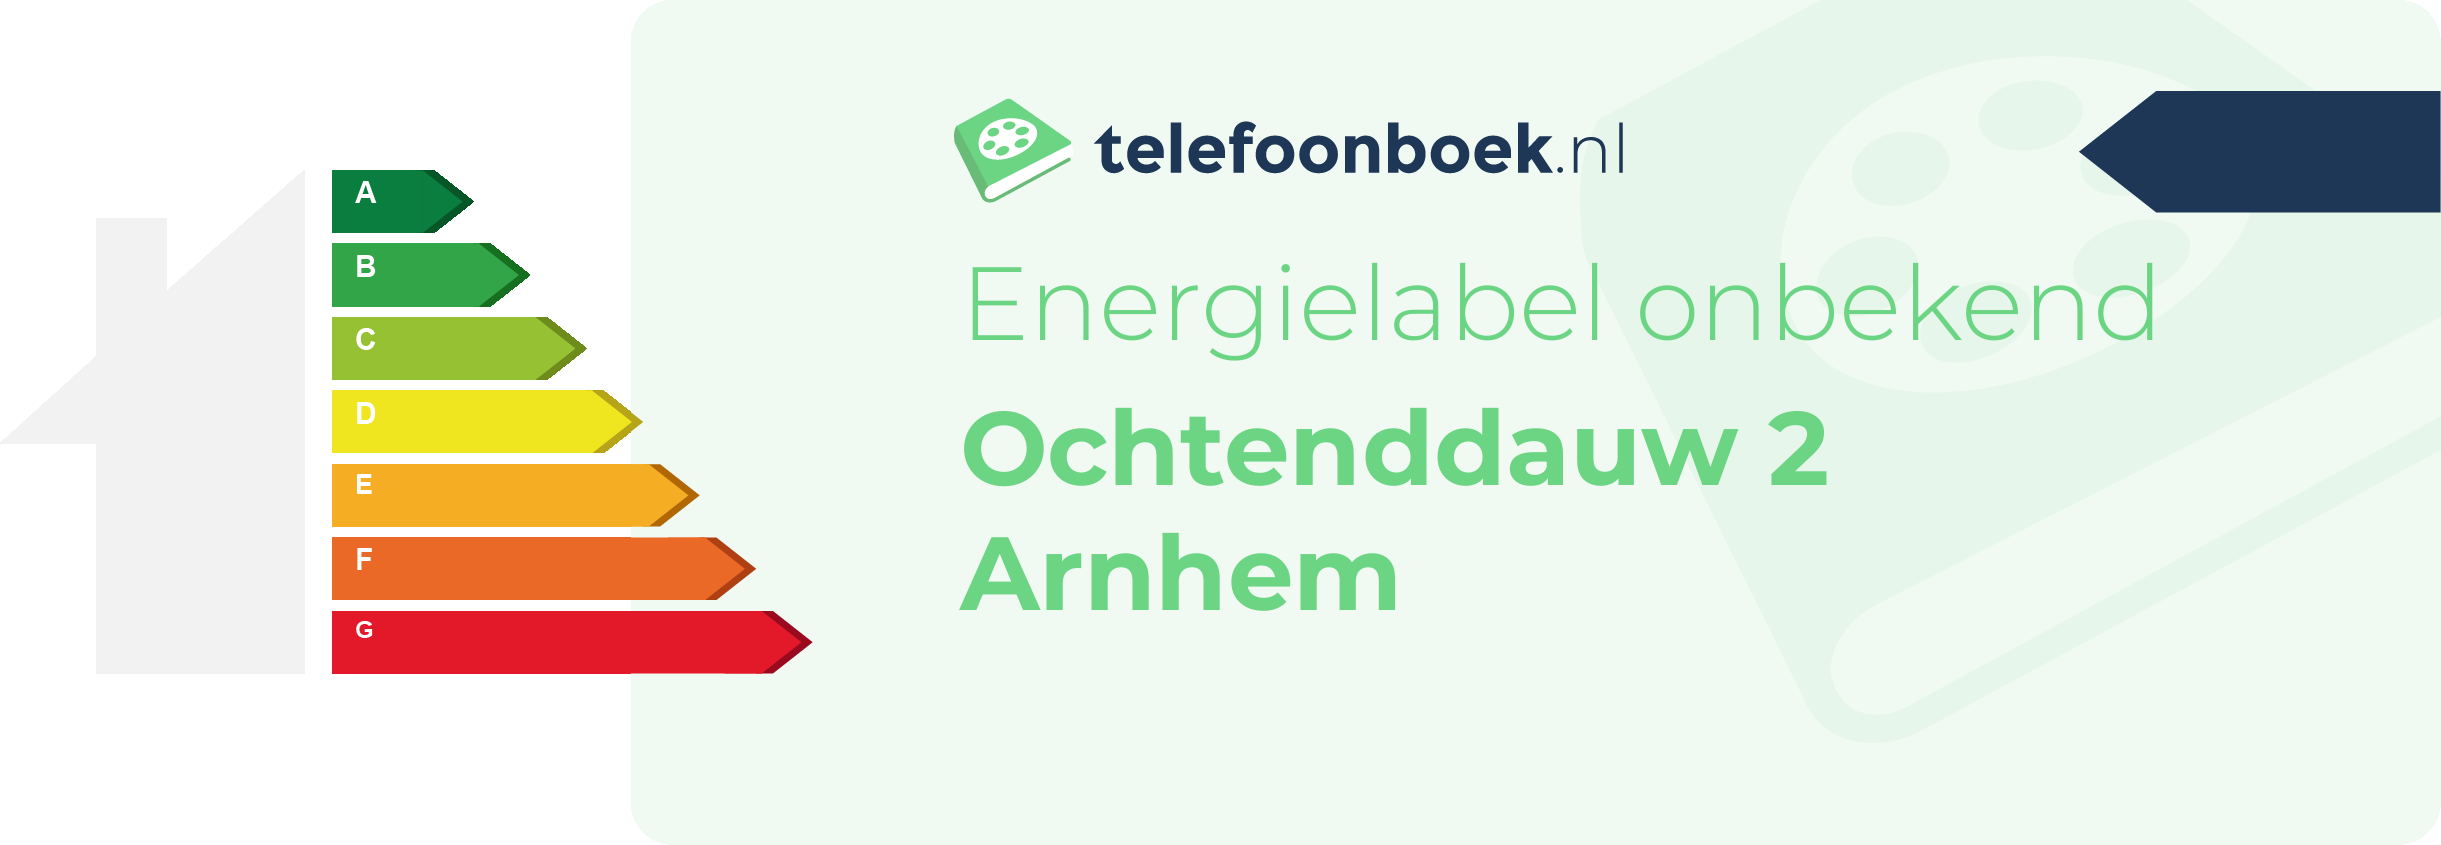 Energielabel Ochtenddauw 2 Arnhem